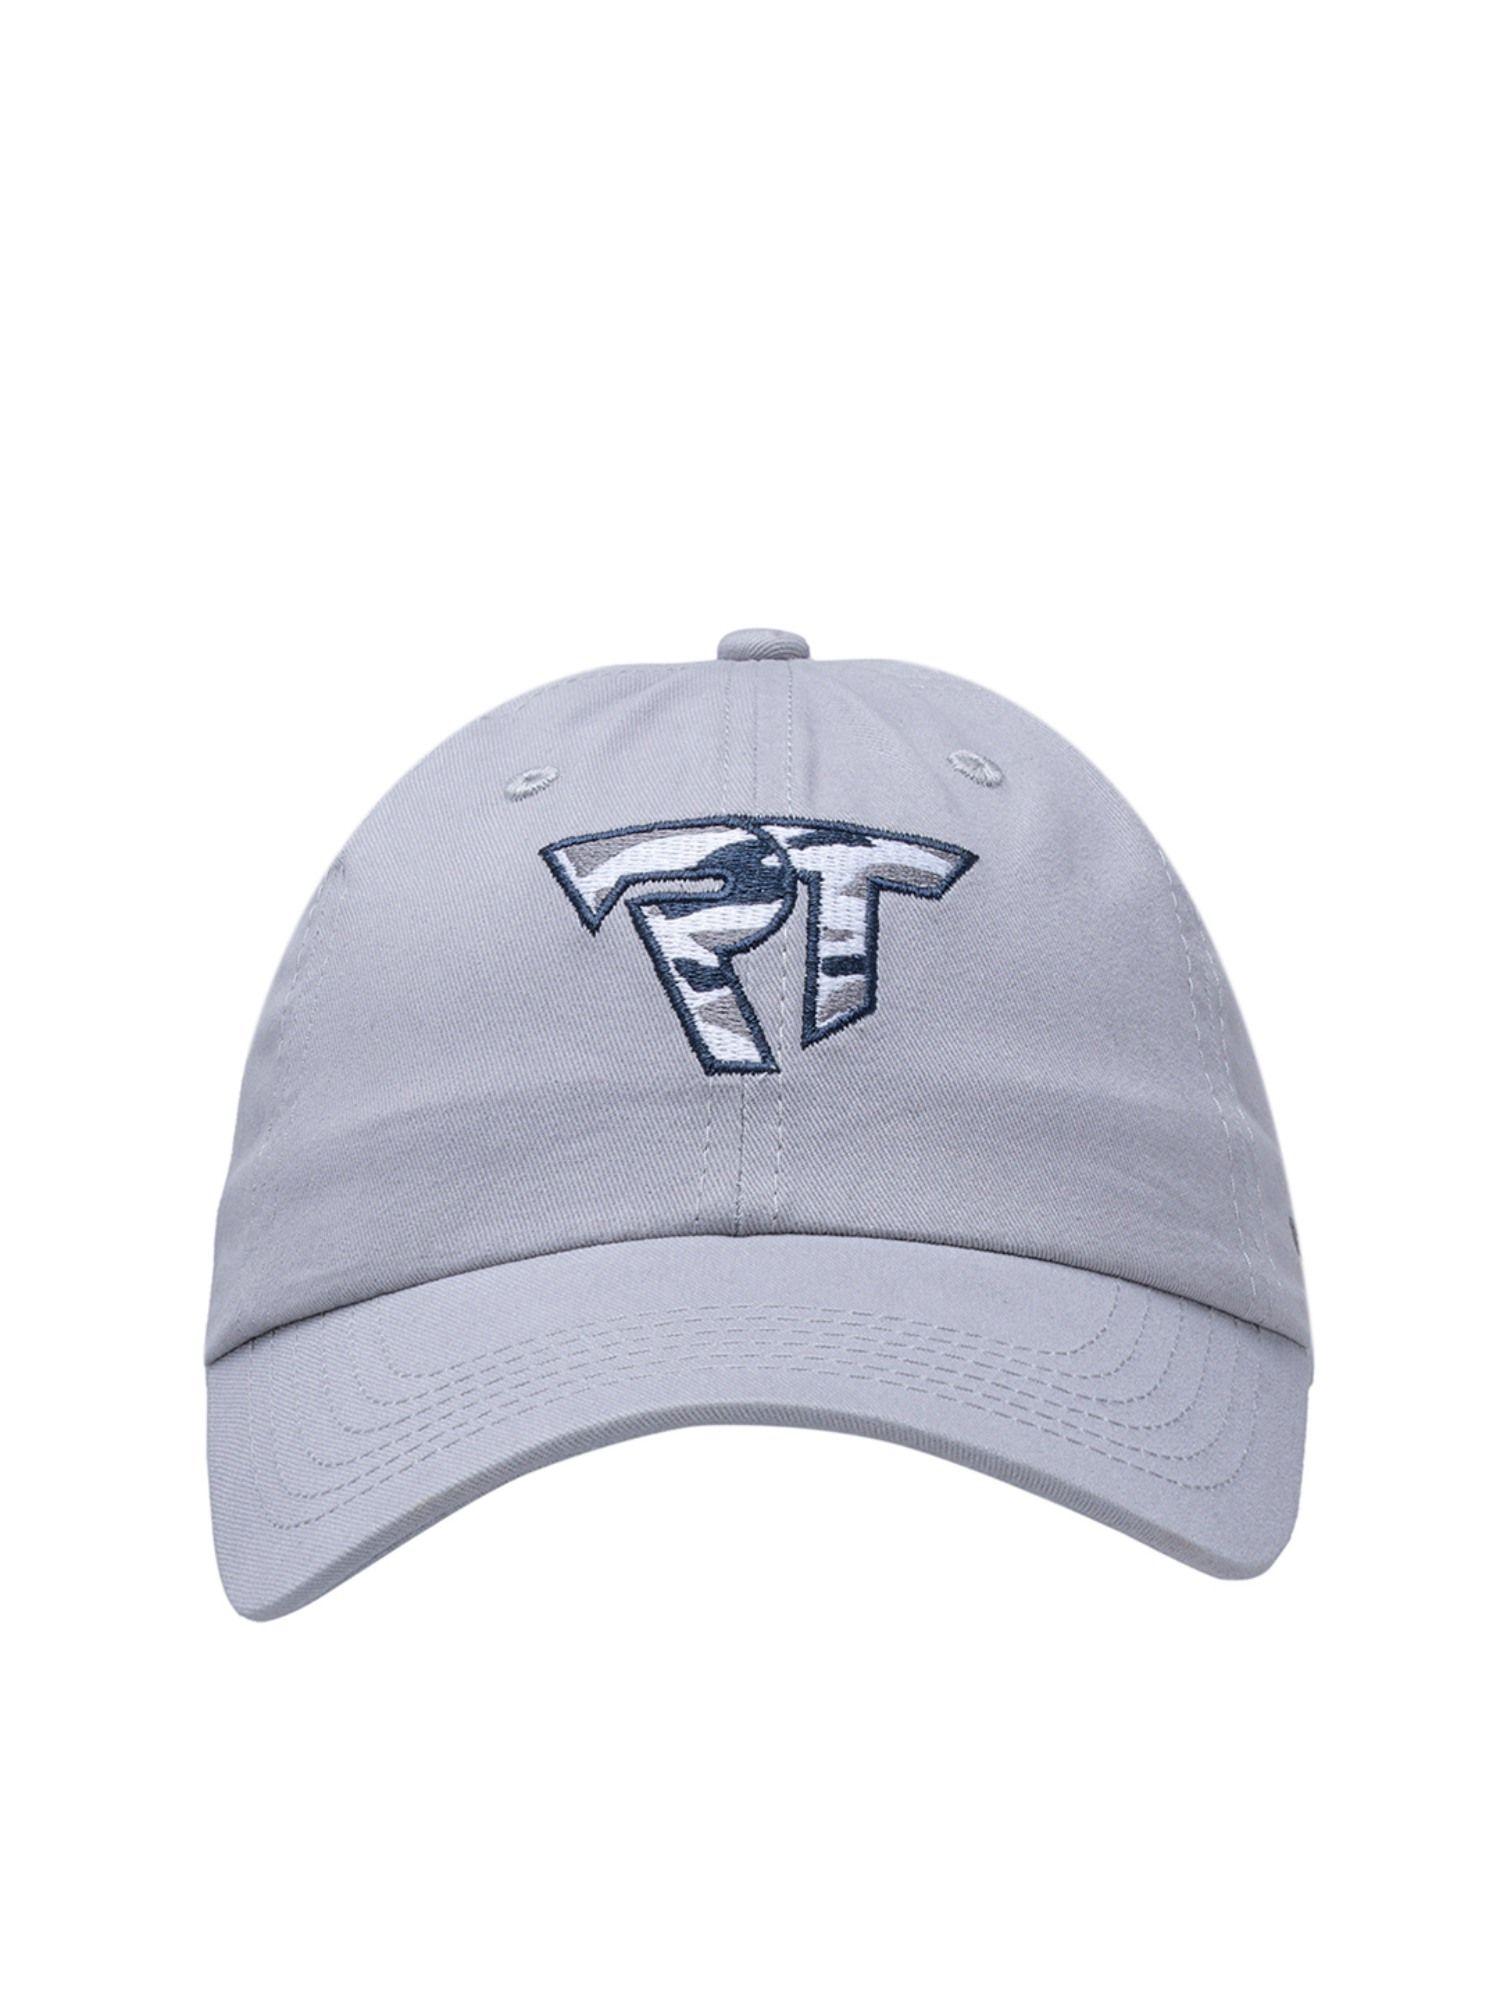 men grey free size cap